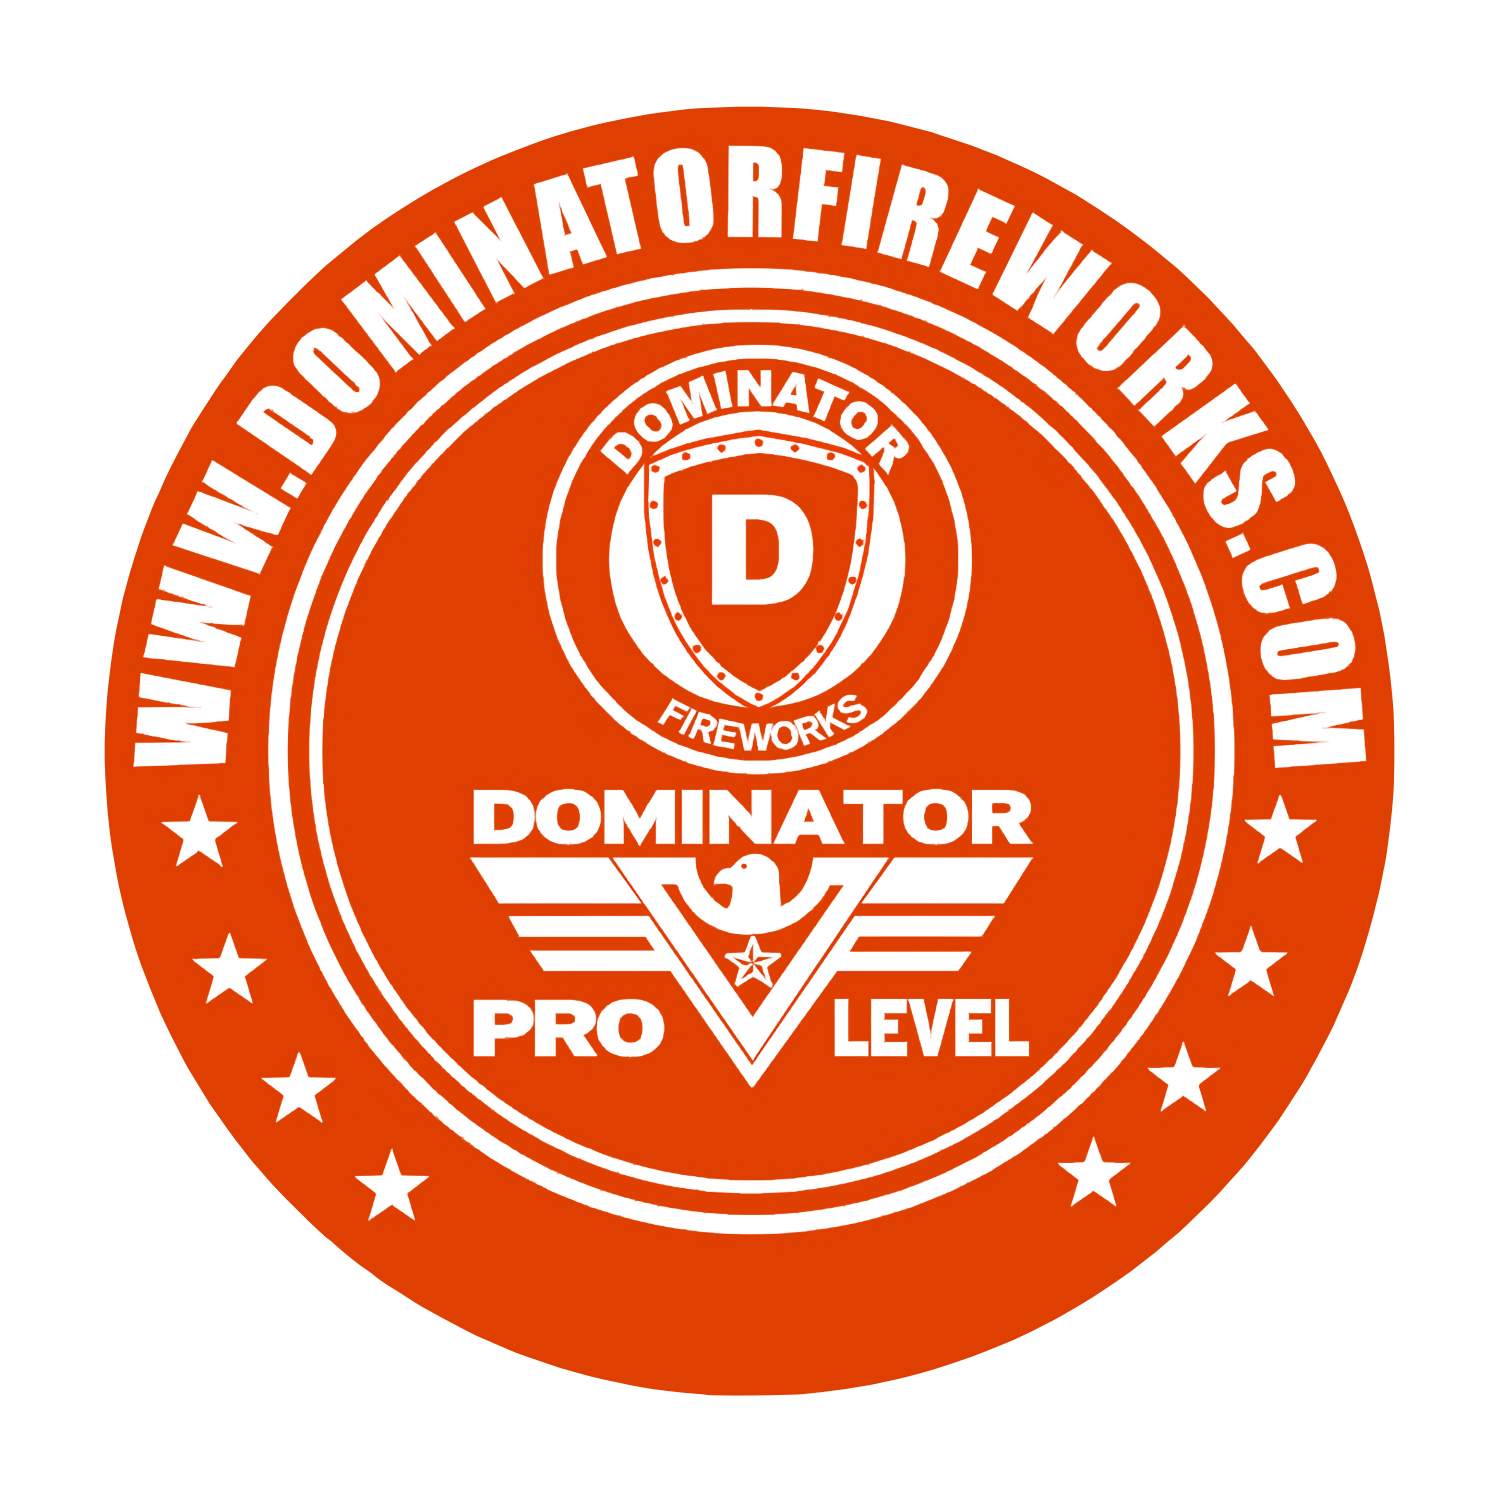 Dominator Pro